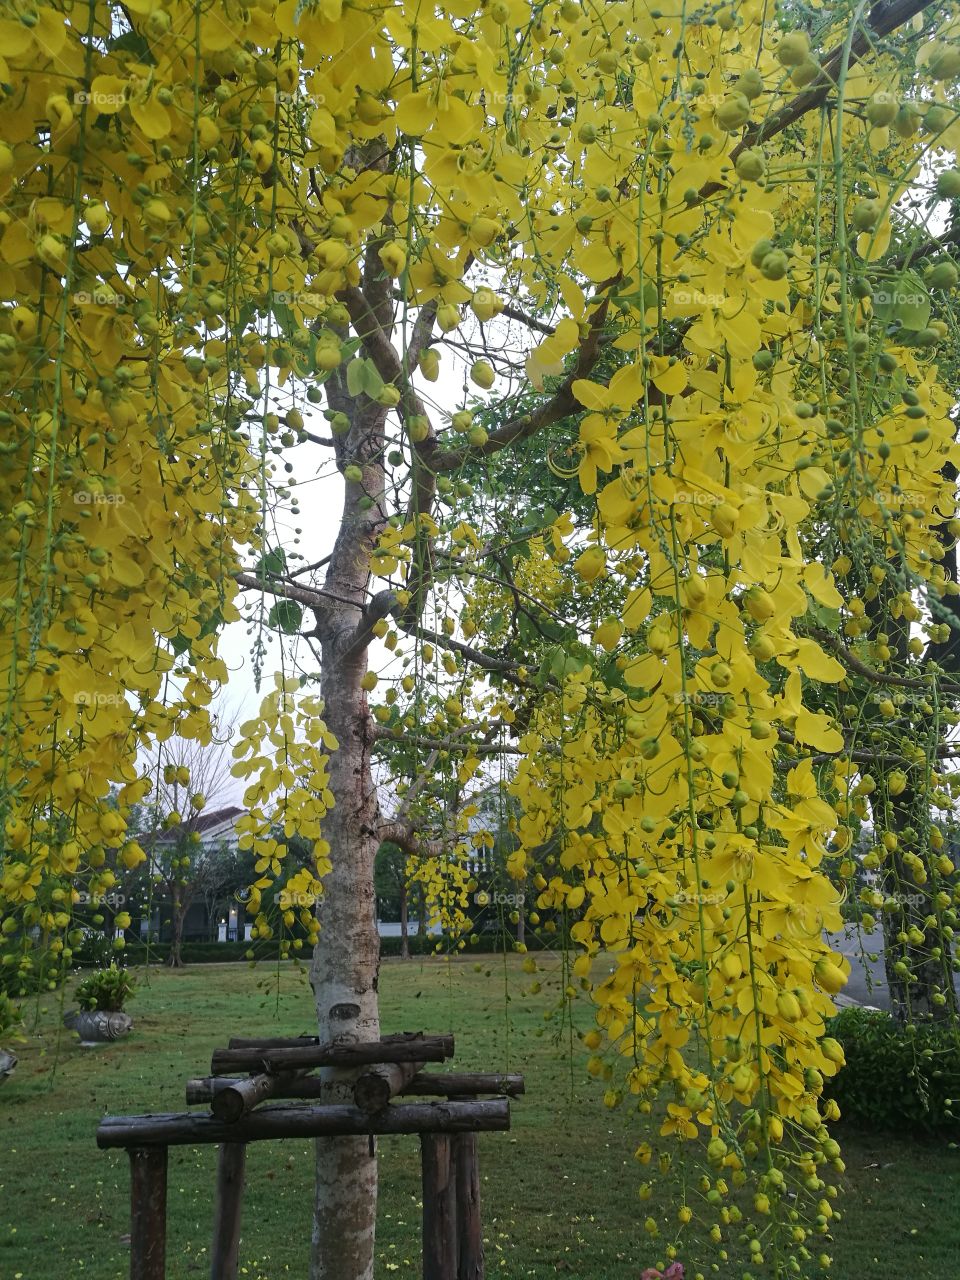 Cassia fistula tree with bouquet of beautiful yellow flowers.